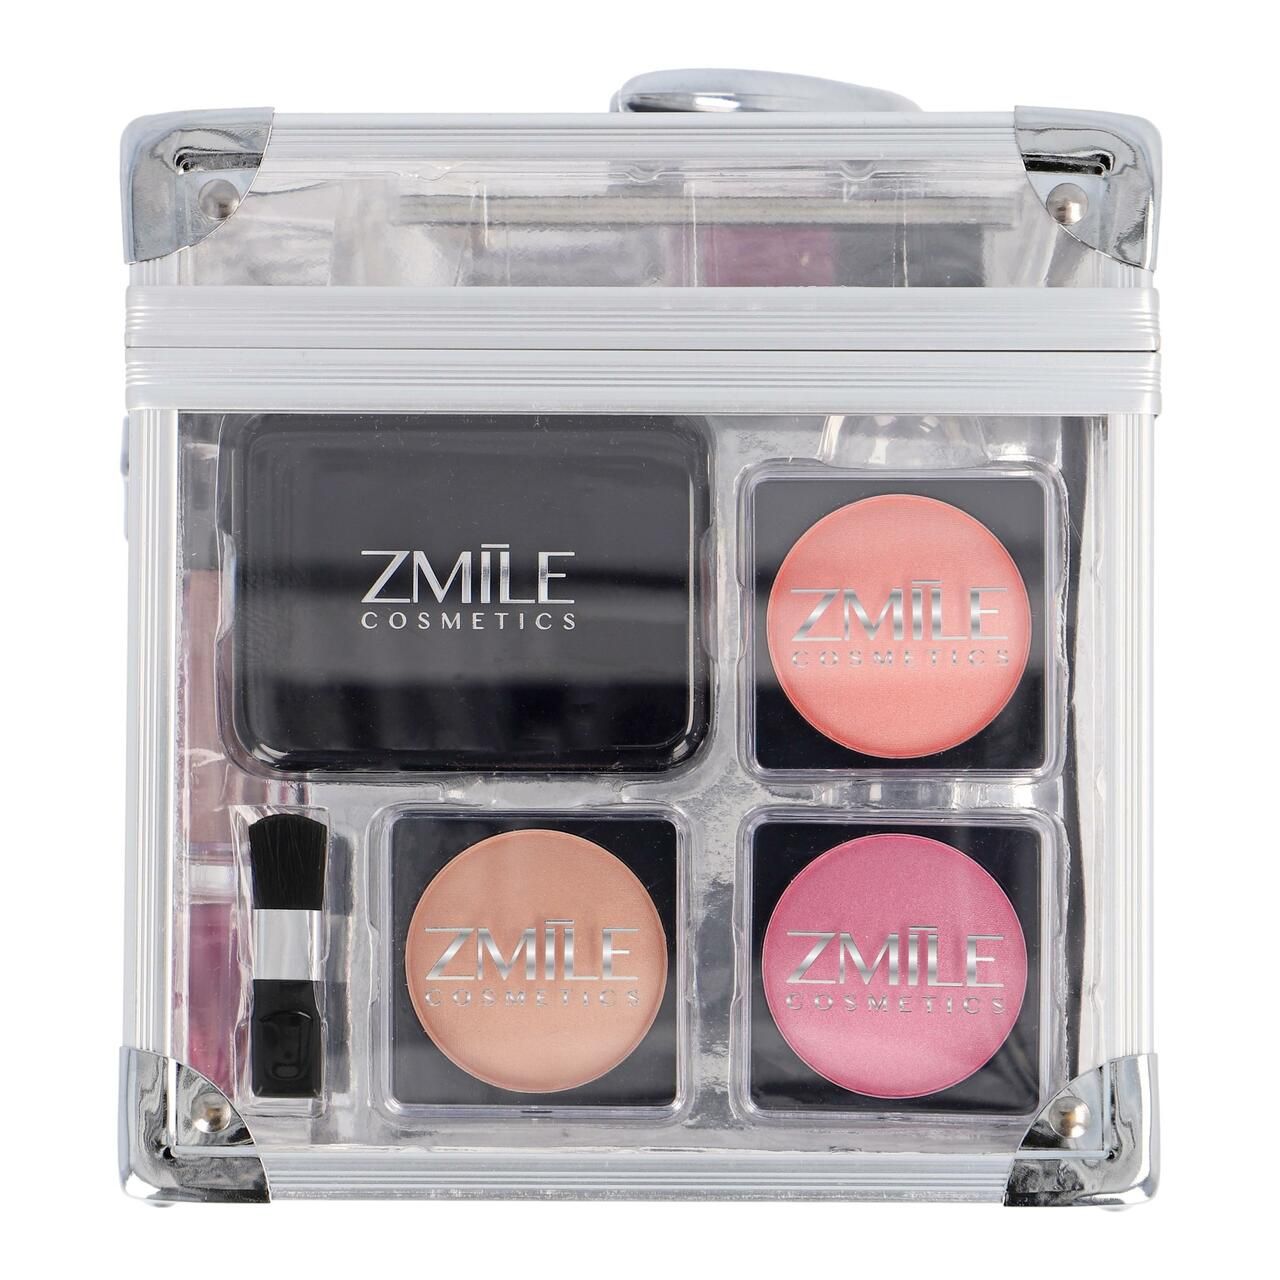 ZMILE cosmetics, Kosmetik-Koffer Acrylic, 42 Teile